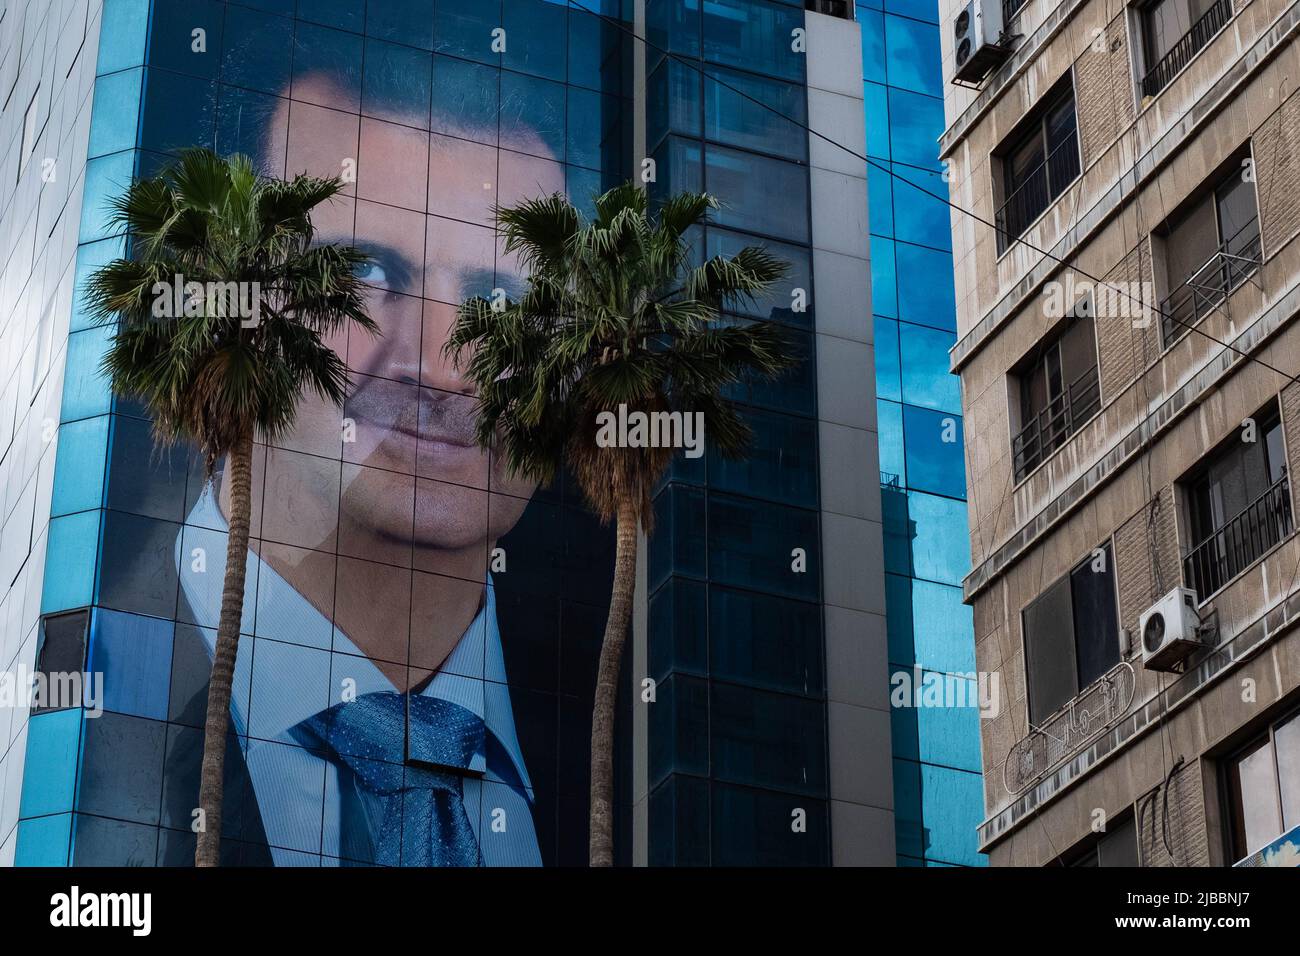 Damascus, Syria -May, 2022: Portrait image of Bashar al-Assad, President of Syria Stock Photo